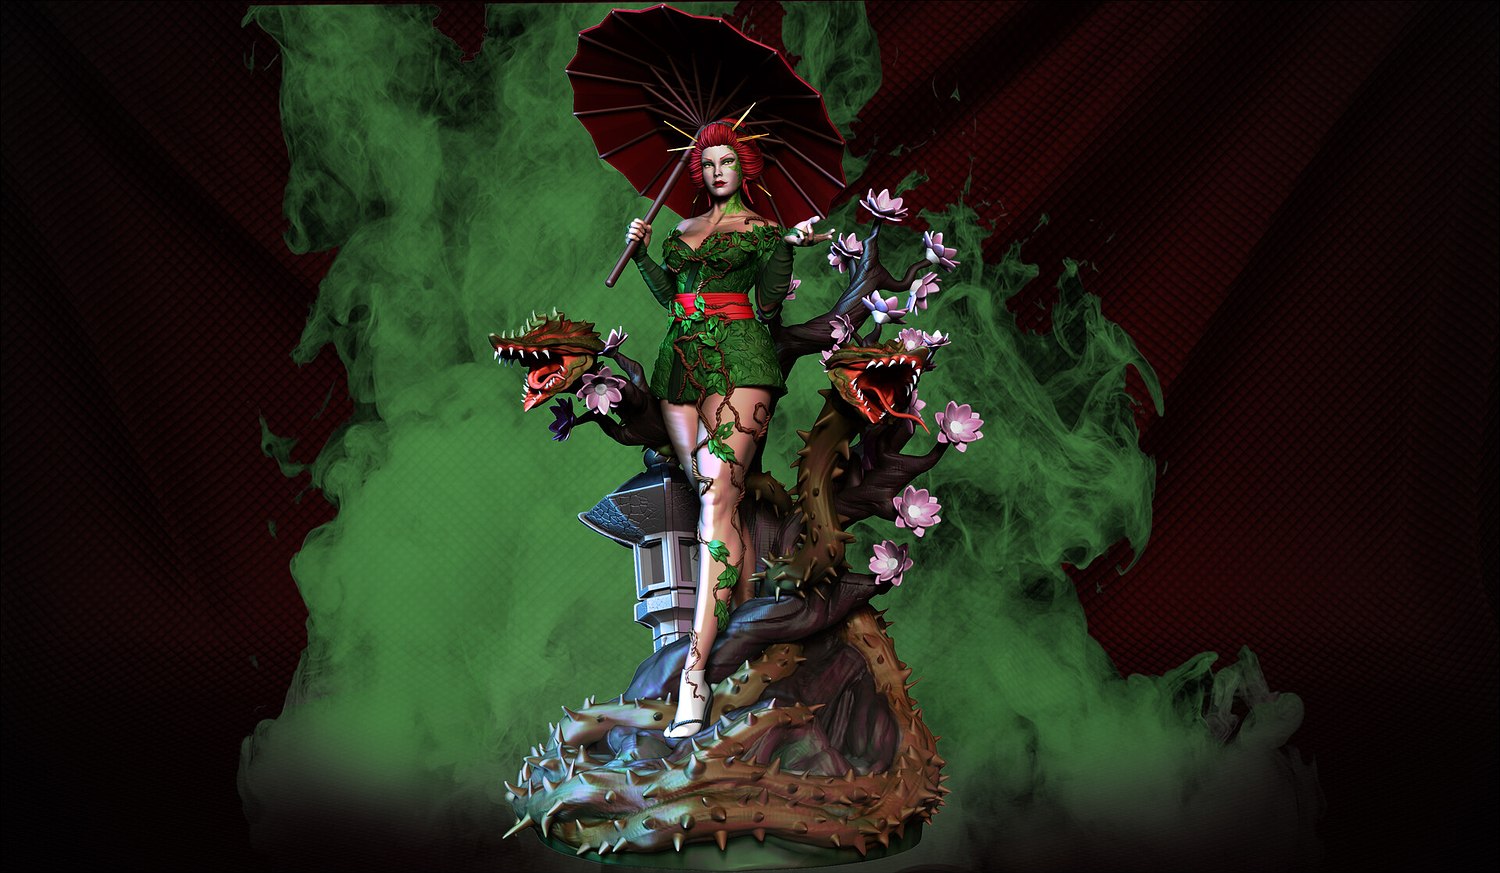 Poison Ivy Samurai From DC